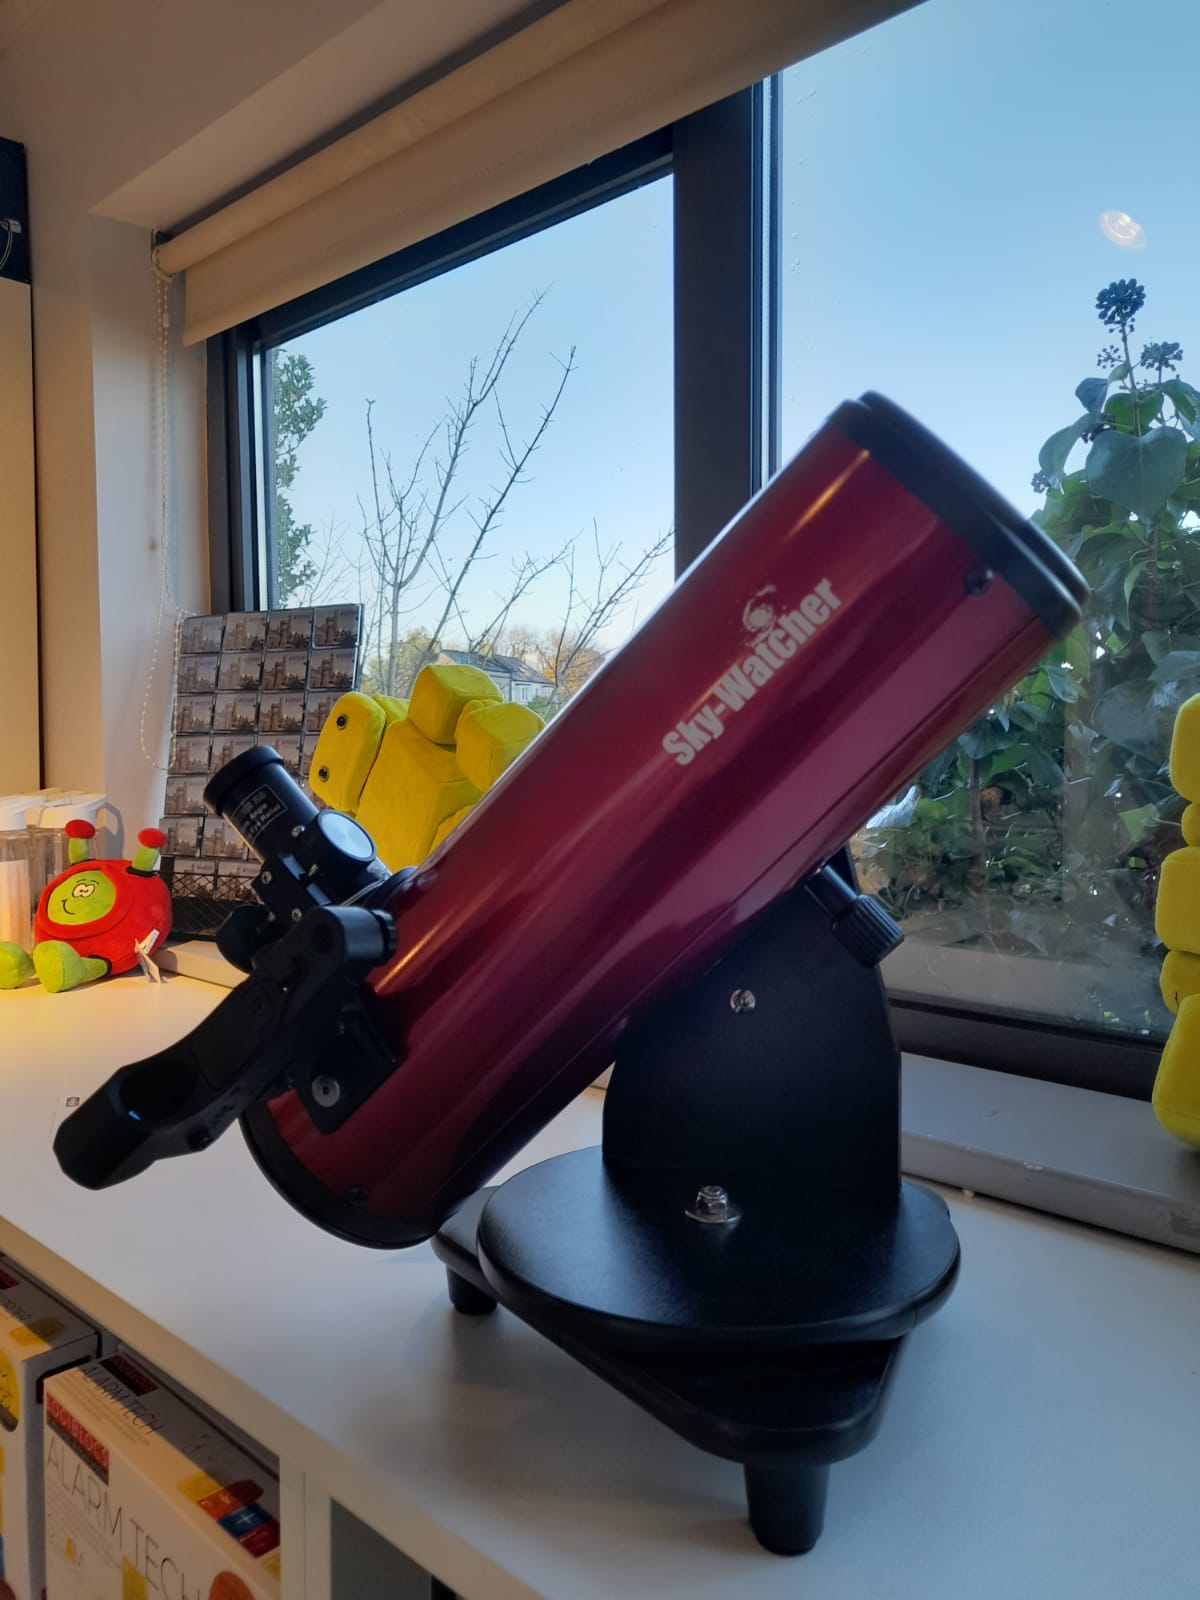 A desktop telescope placed on a windowsill looking outwards. It is red on a black mount